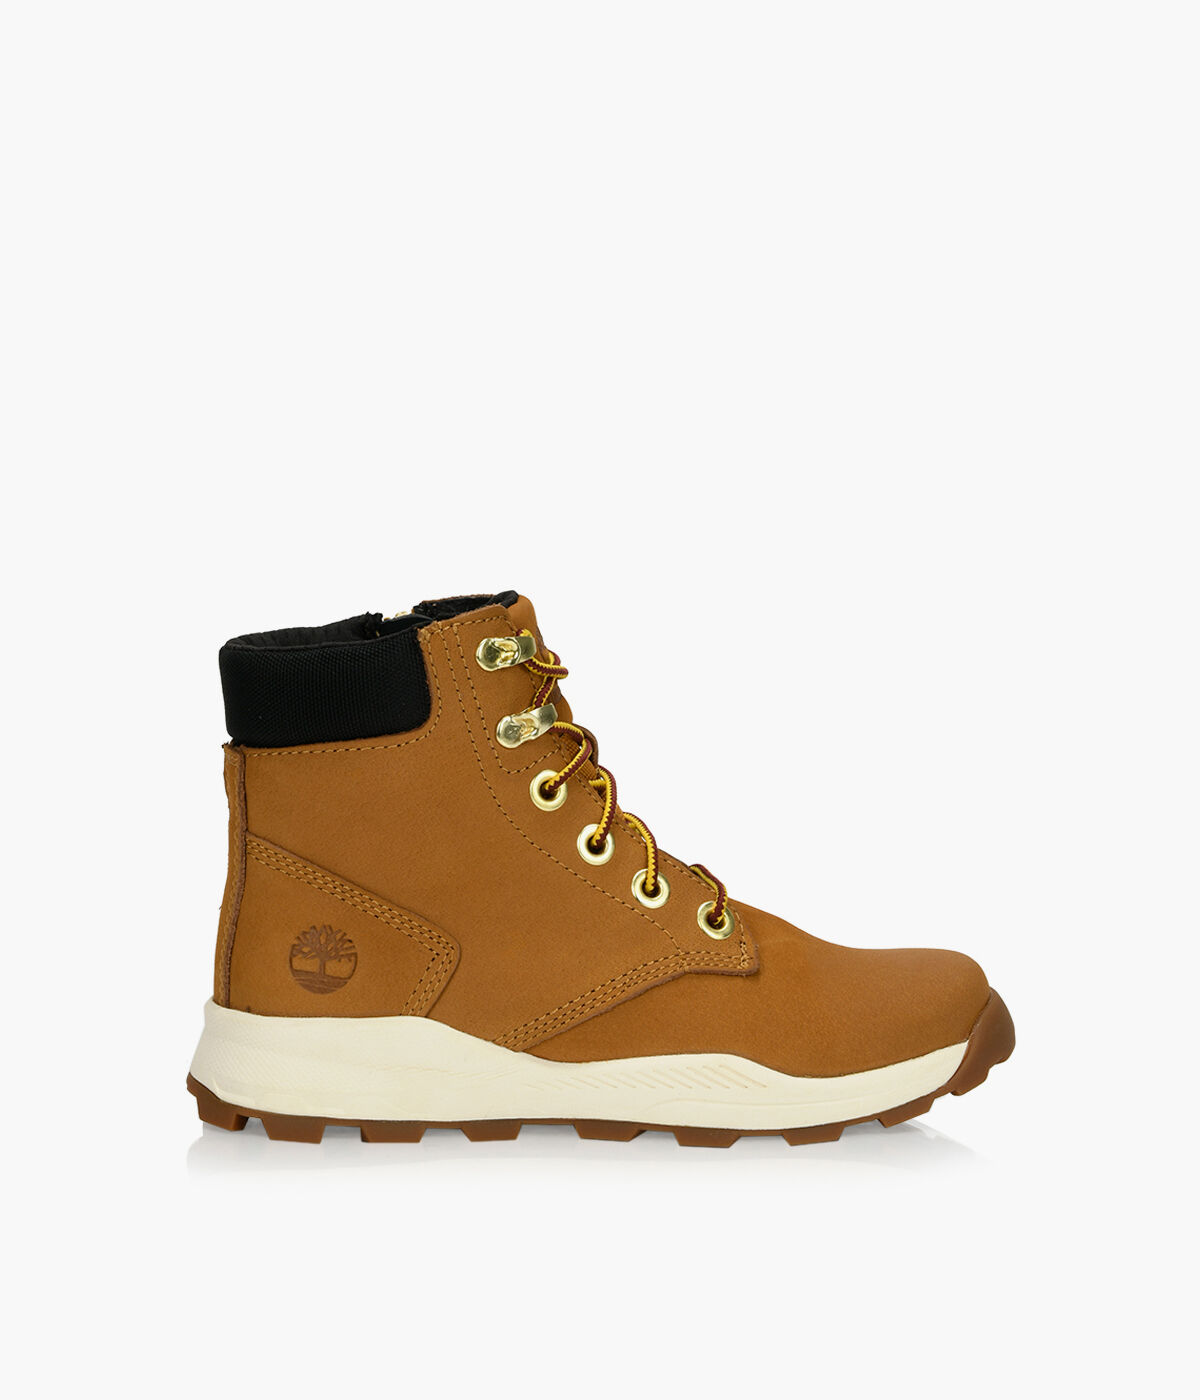 timberland brooklyn sneaker boots